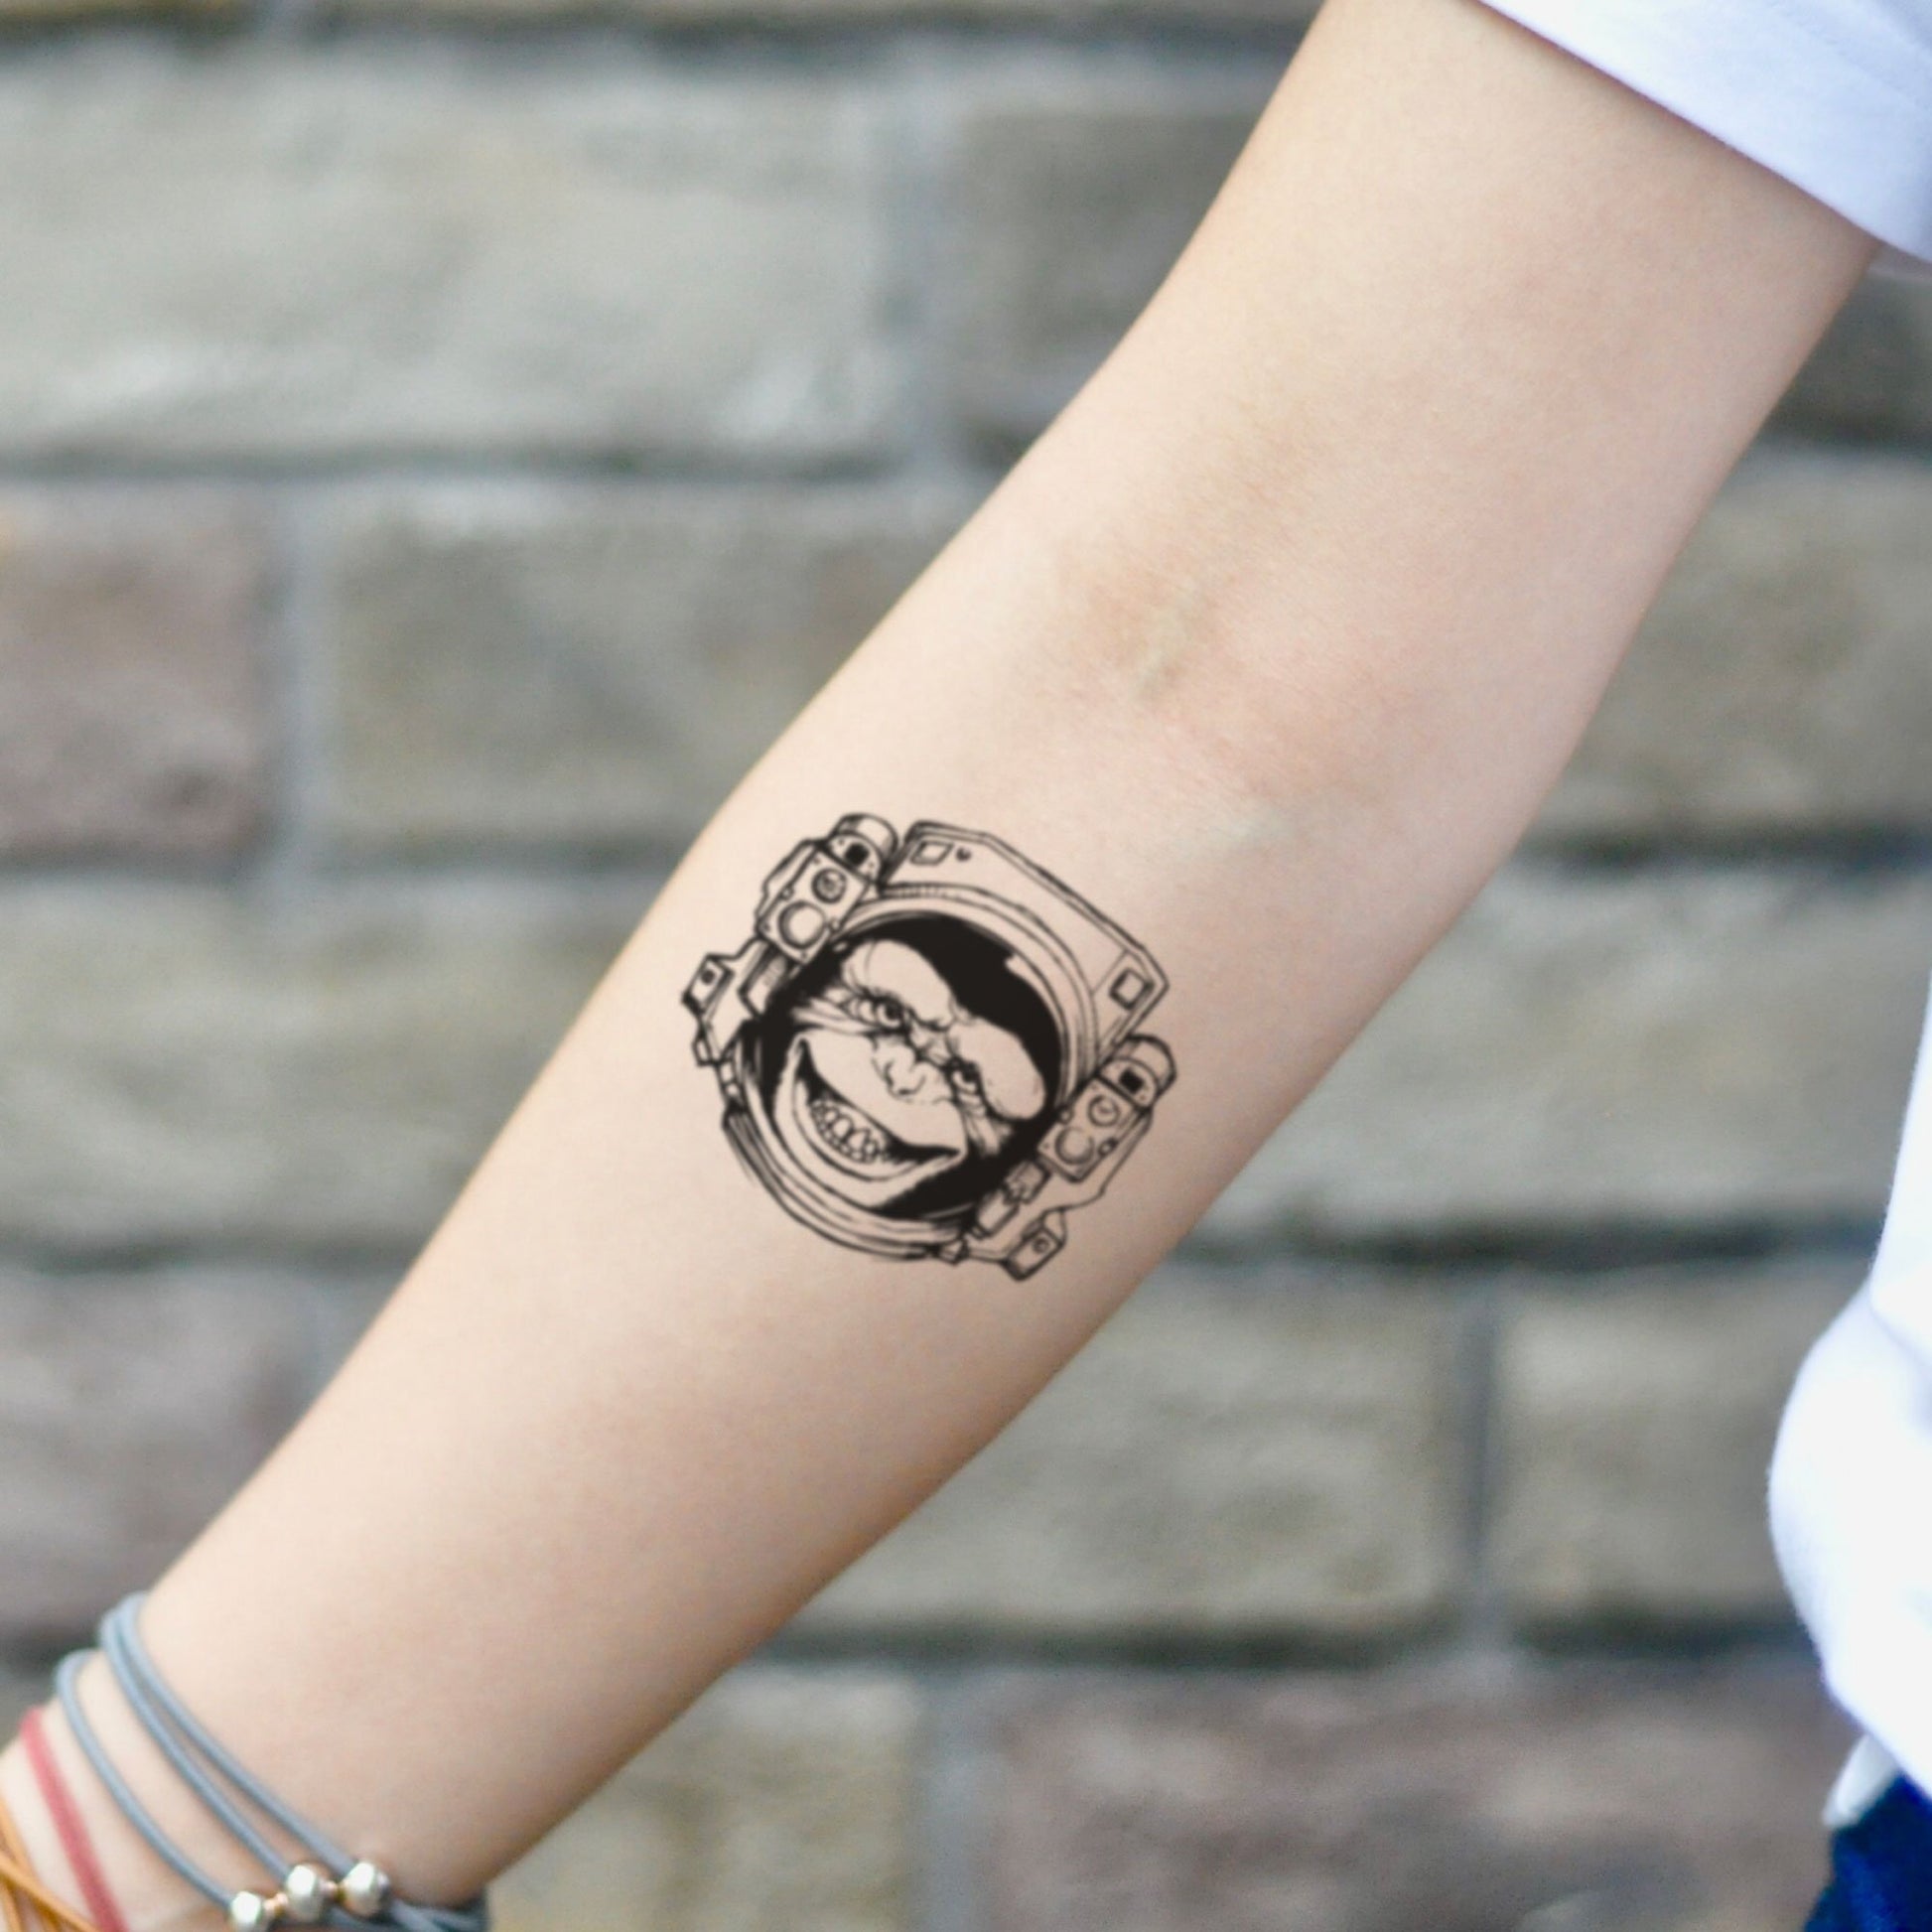 fake small space monkey new school astronaut animal temporary tattoo sticker design idea on inner arm